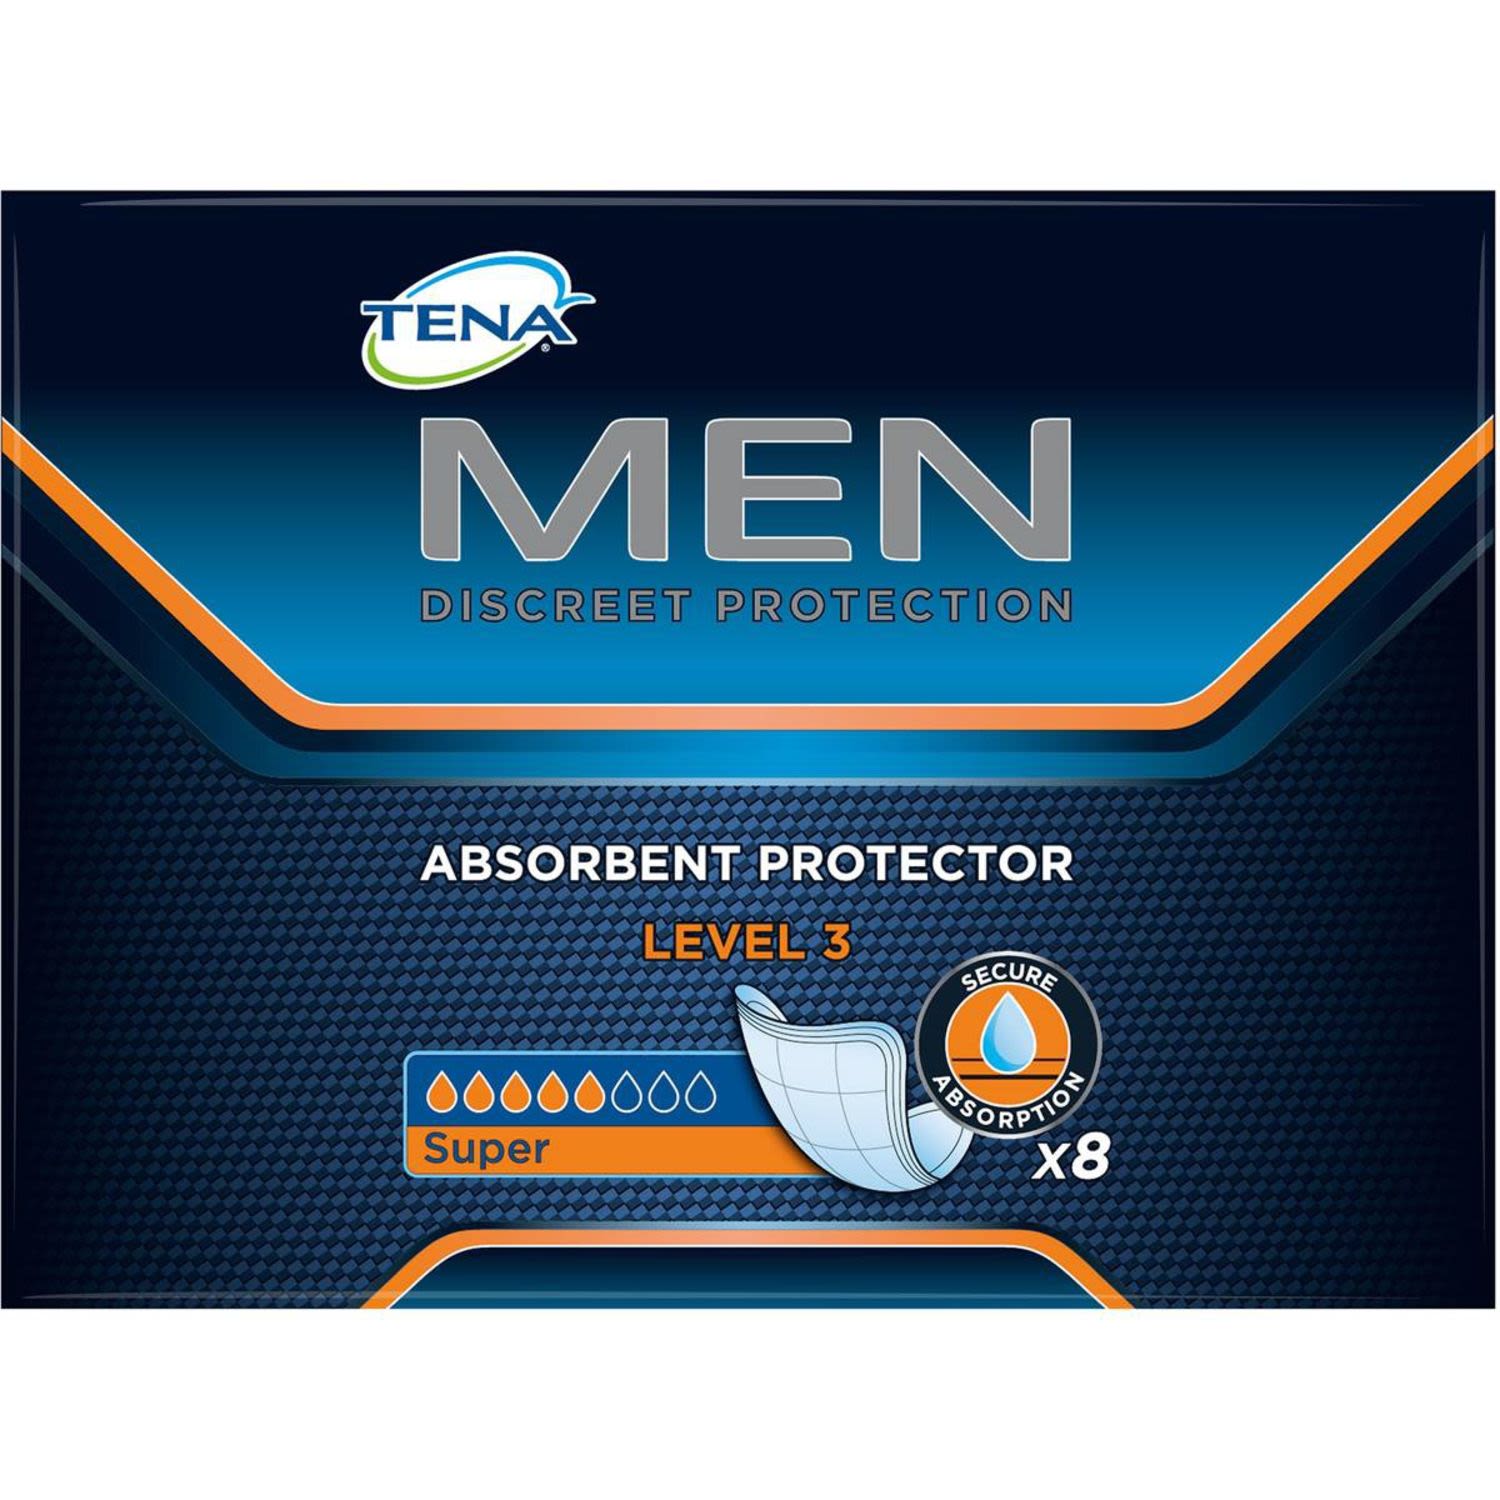 Tena Men Absorbent Protector Level 3, 8 Each